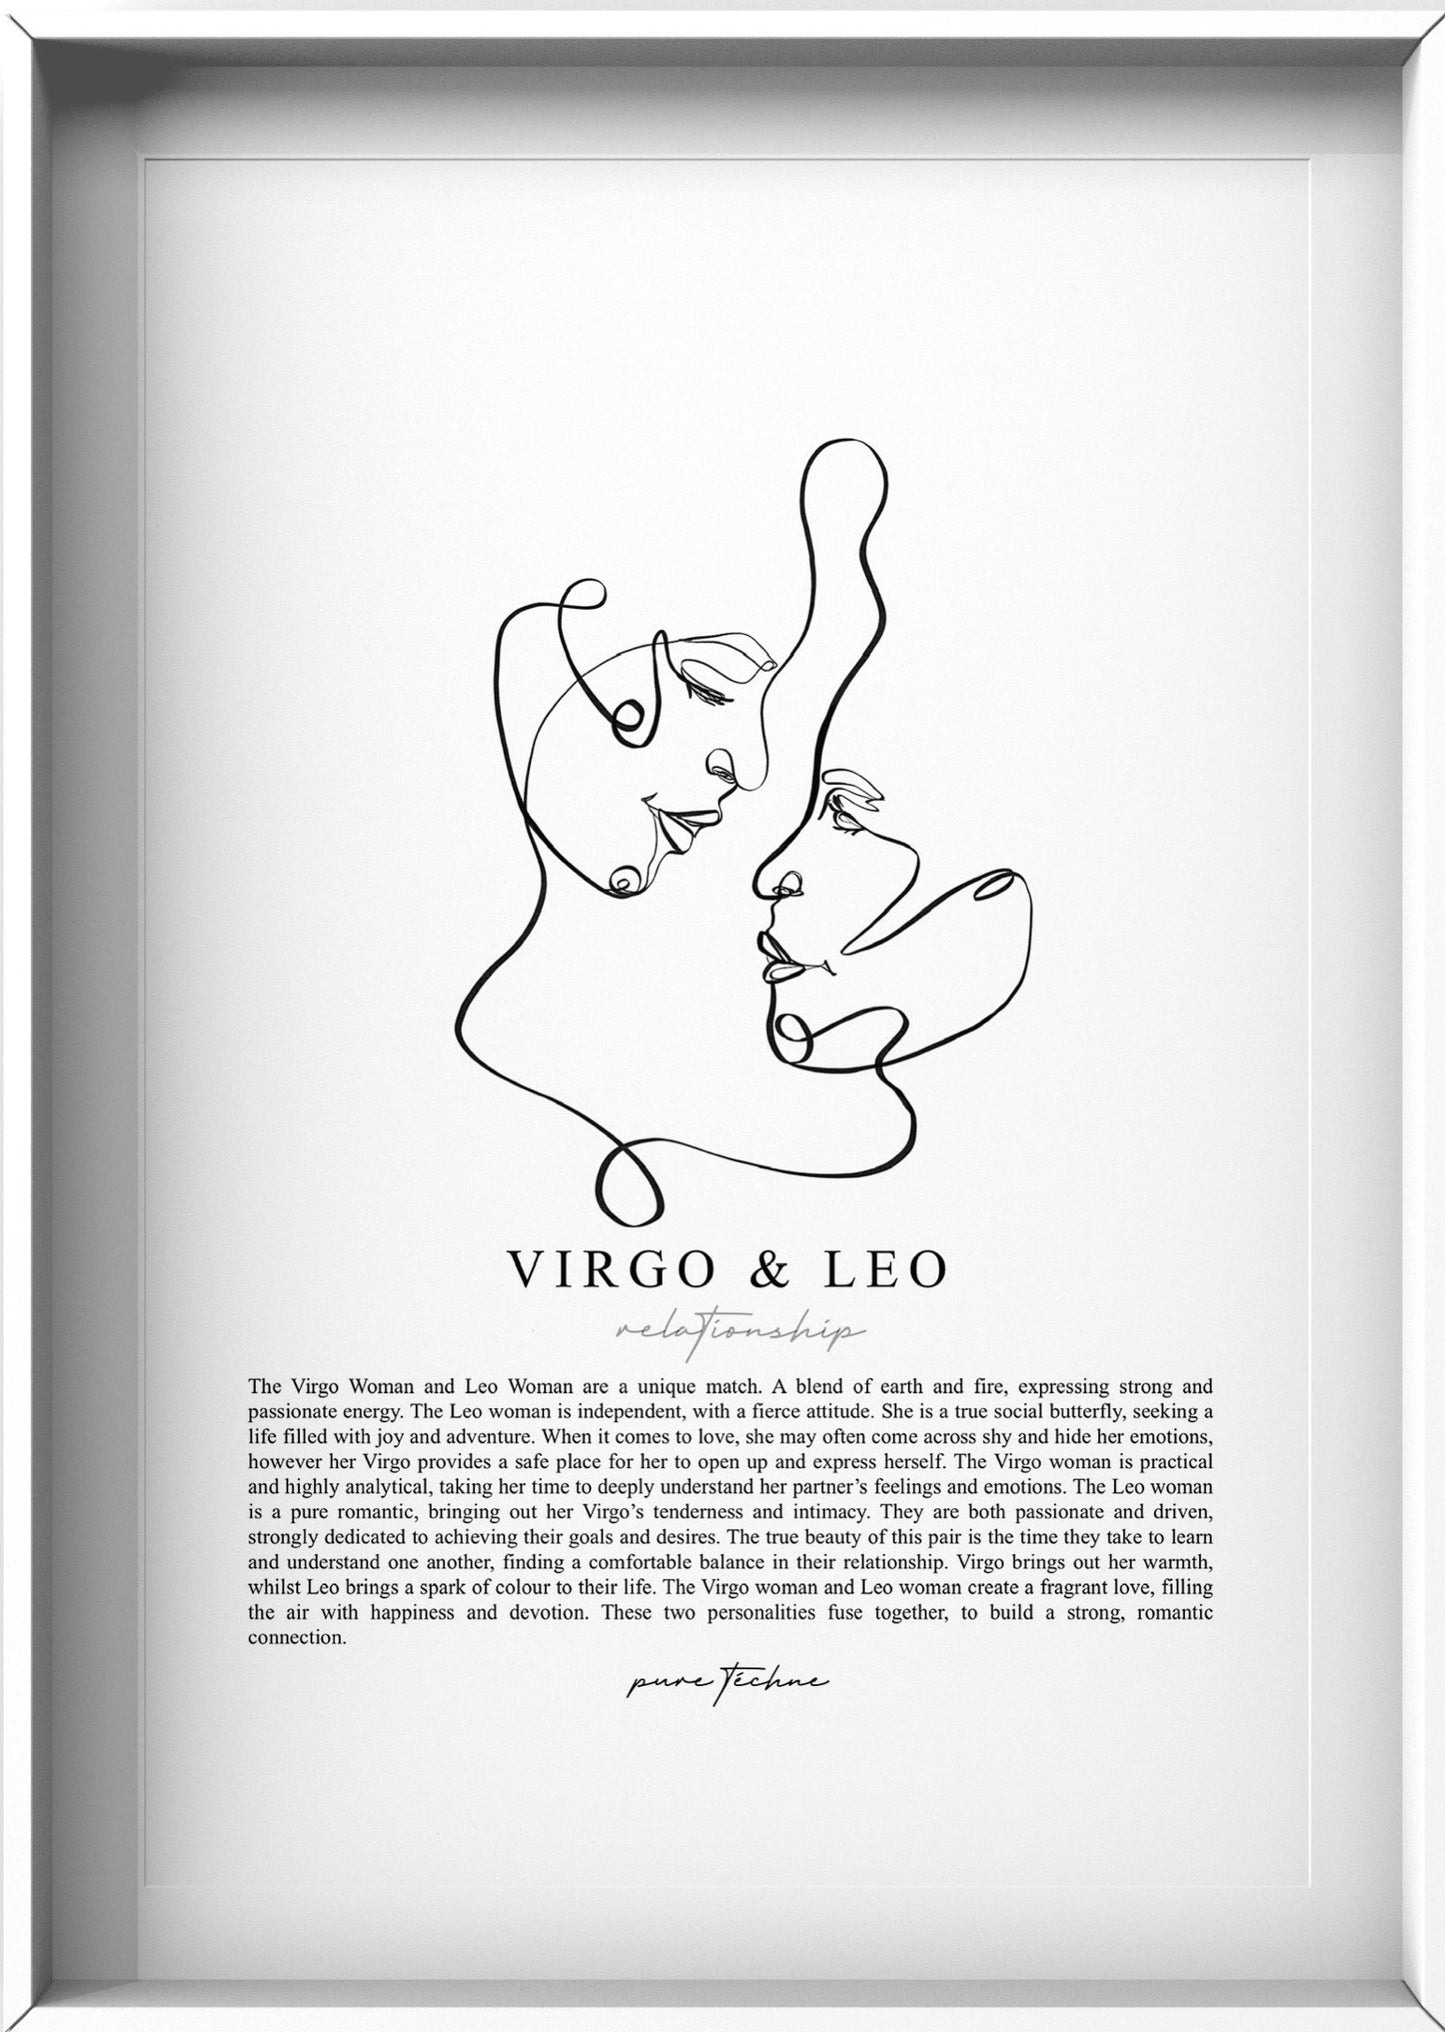 Virgo Woman & Leo Woman